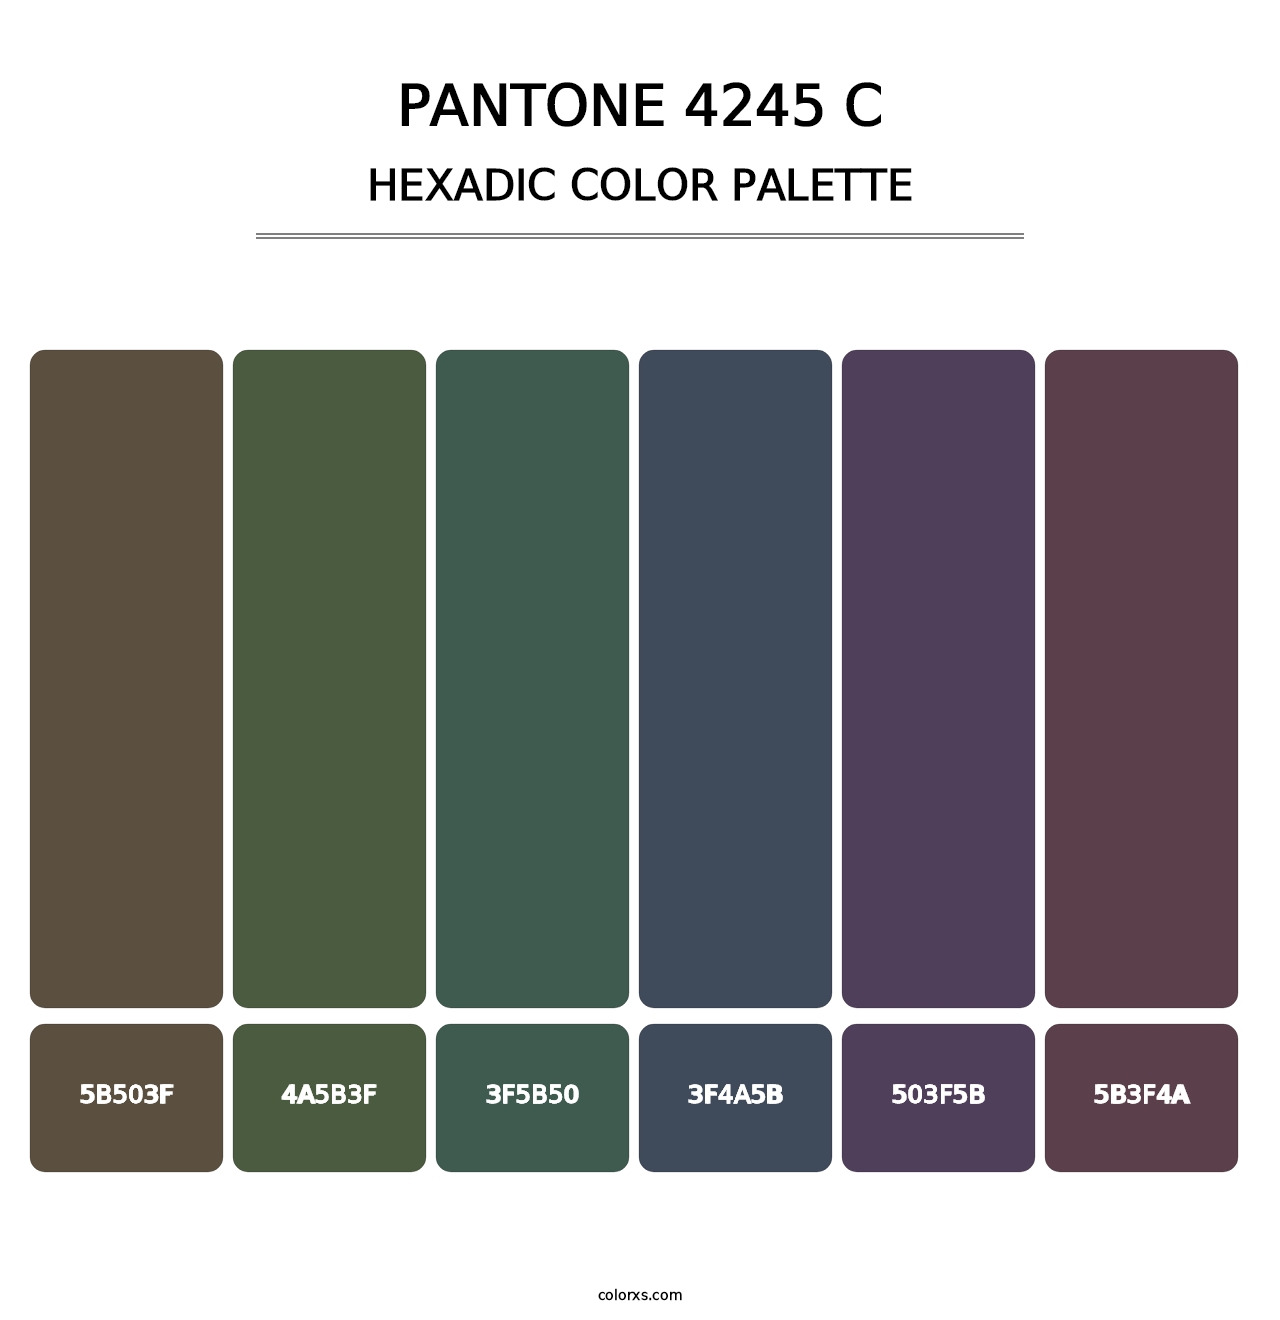 PANTONE 4245 C - Hexadic Color Palette